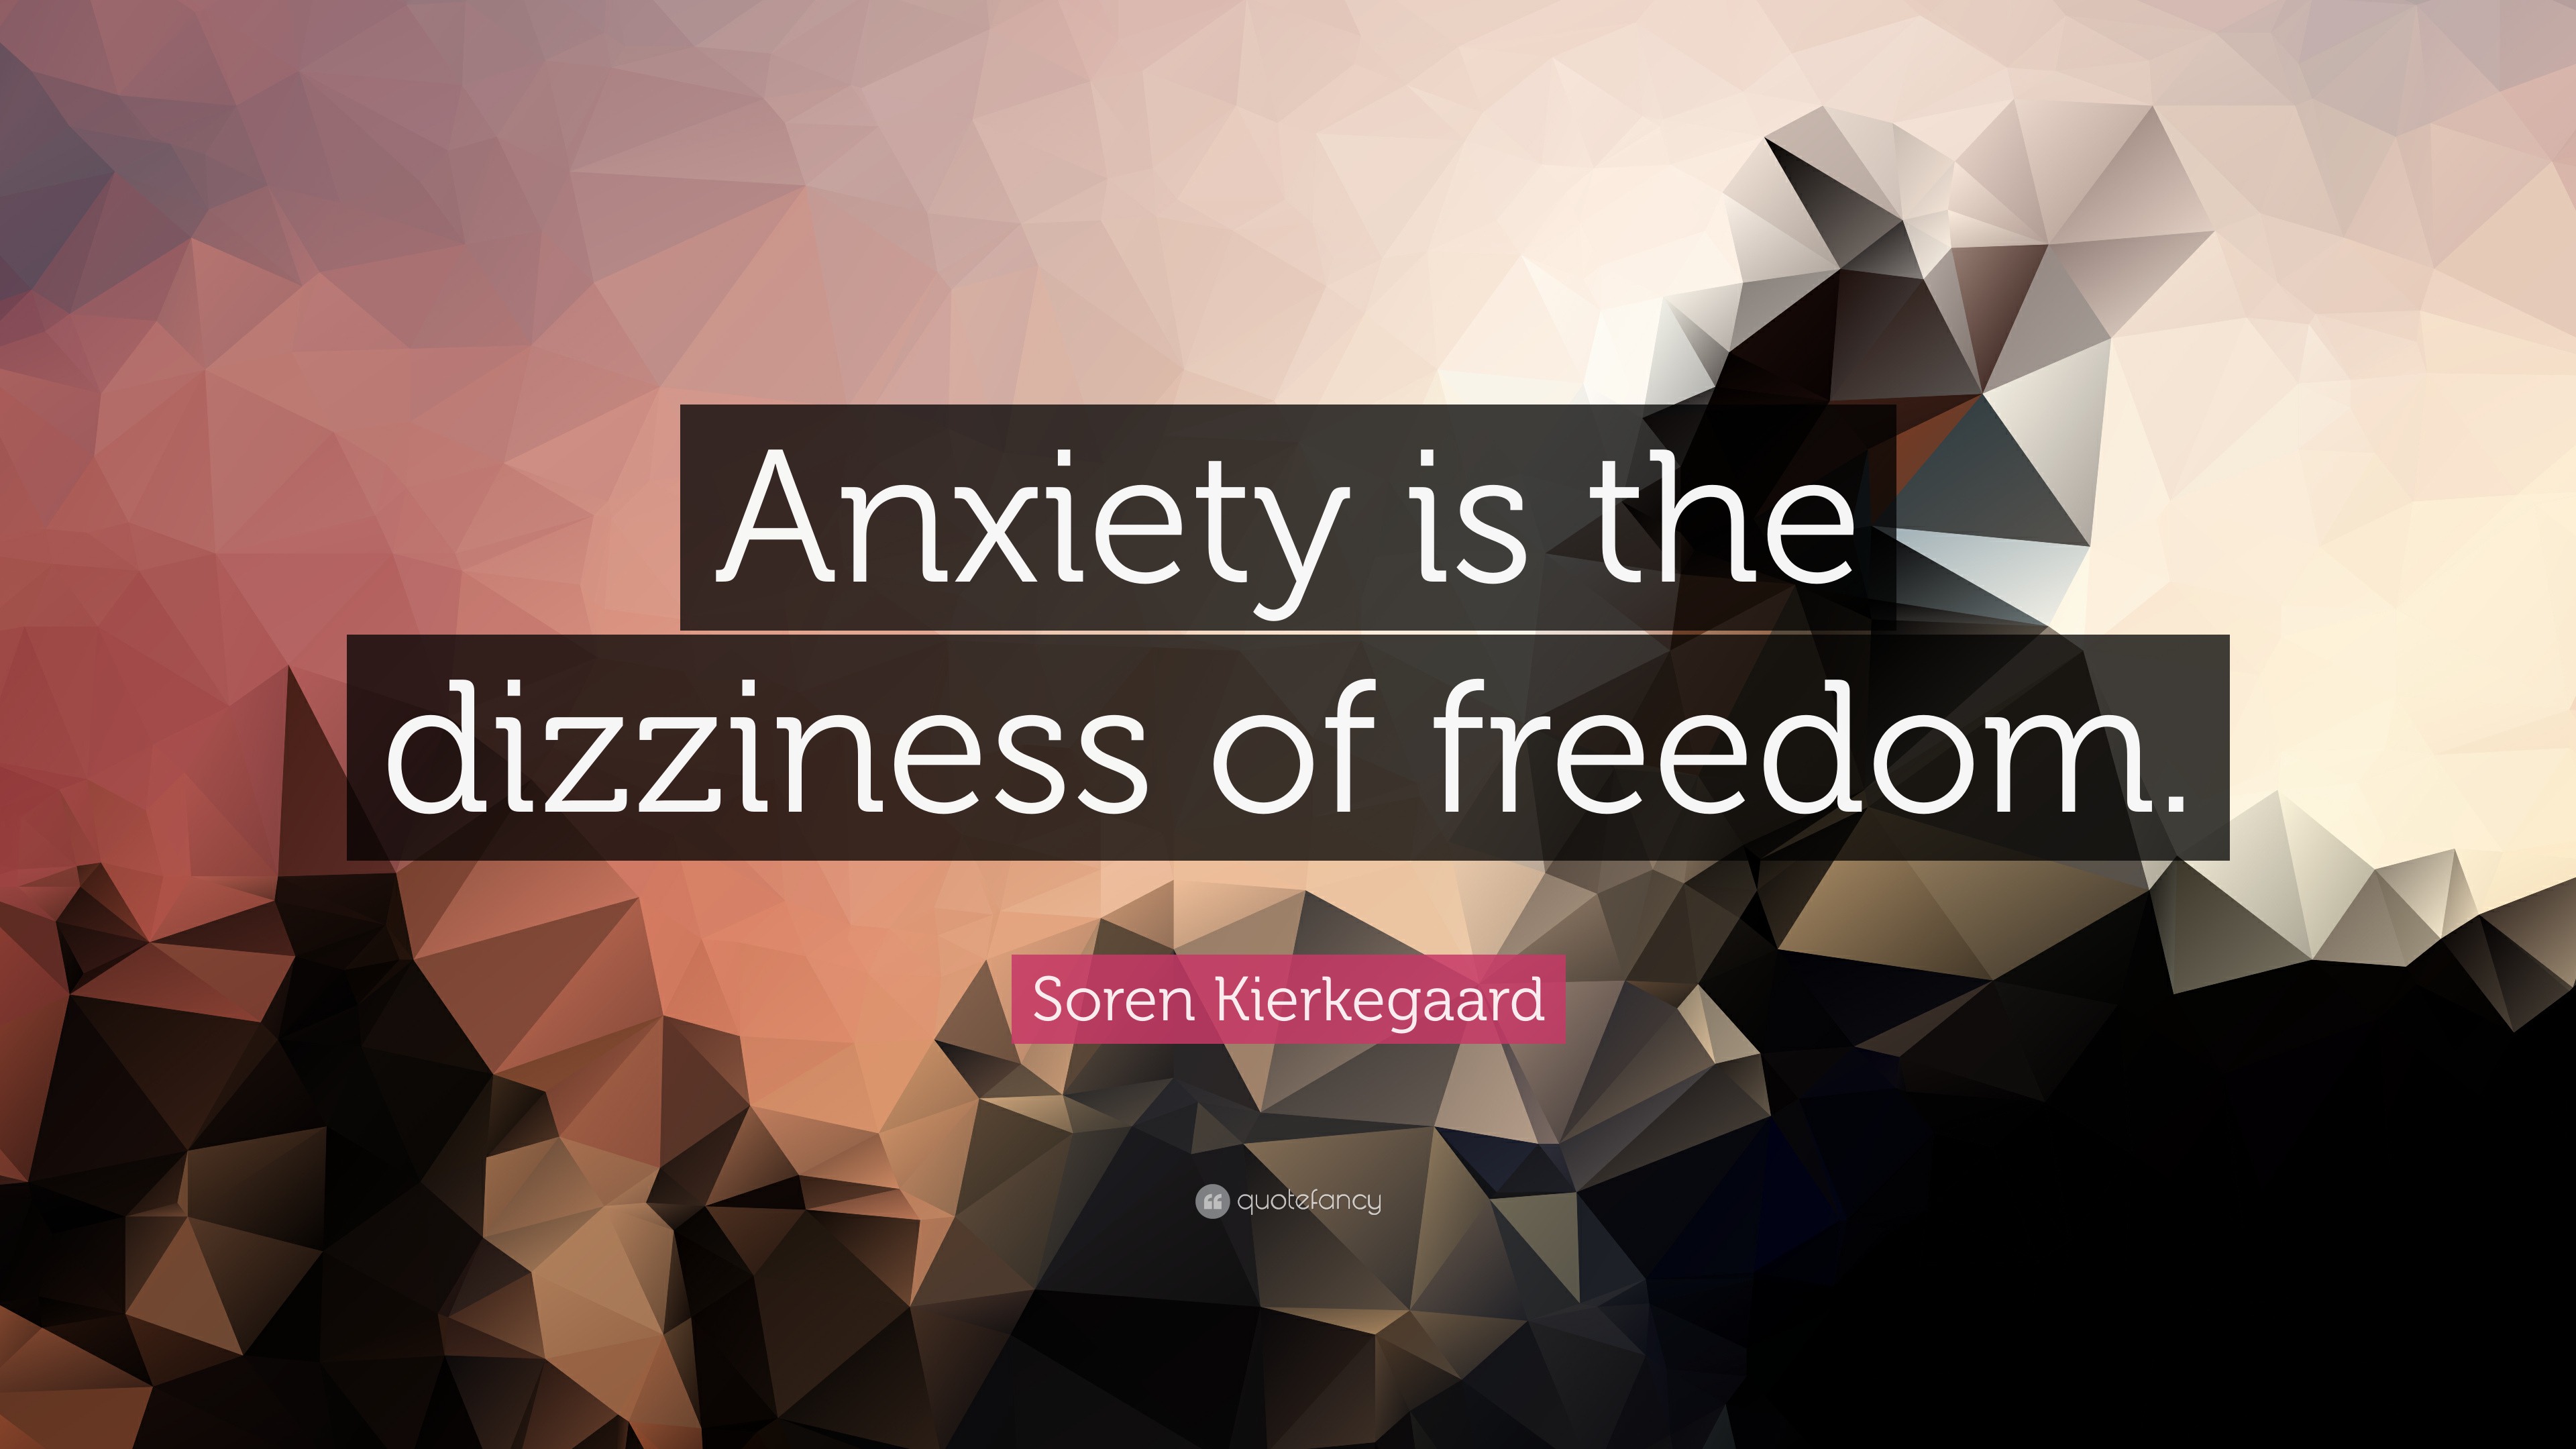 søren kierkegaard the concept of anxiety